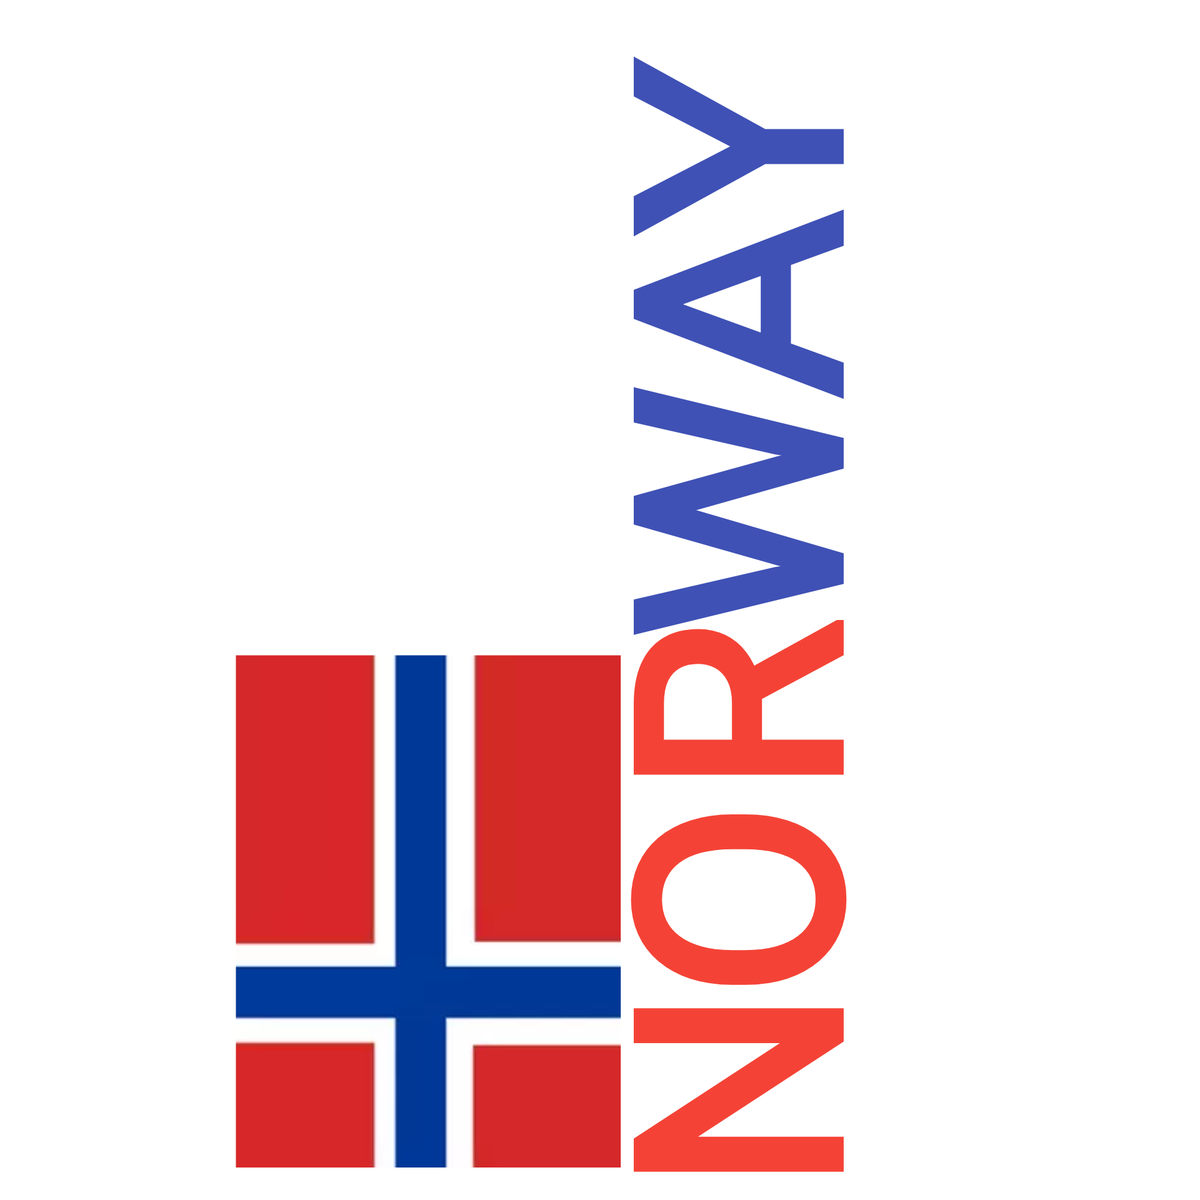 Norway Design Art.
#logo #logos #logodesign #logomaker #DESIGNART #design #designinspiration #Font #Designship2022 #designthinking #design #designjobs #DesignGrowth #designtwitter #Logodesigner